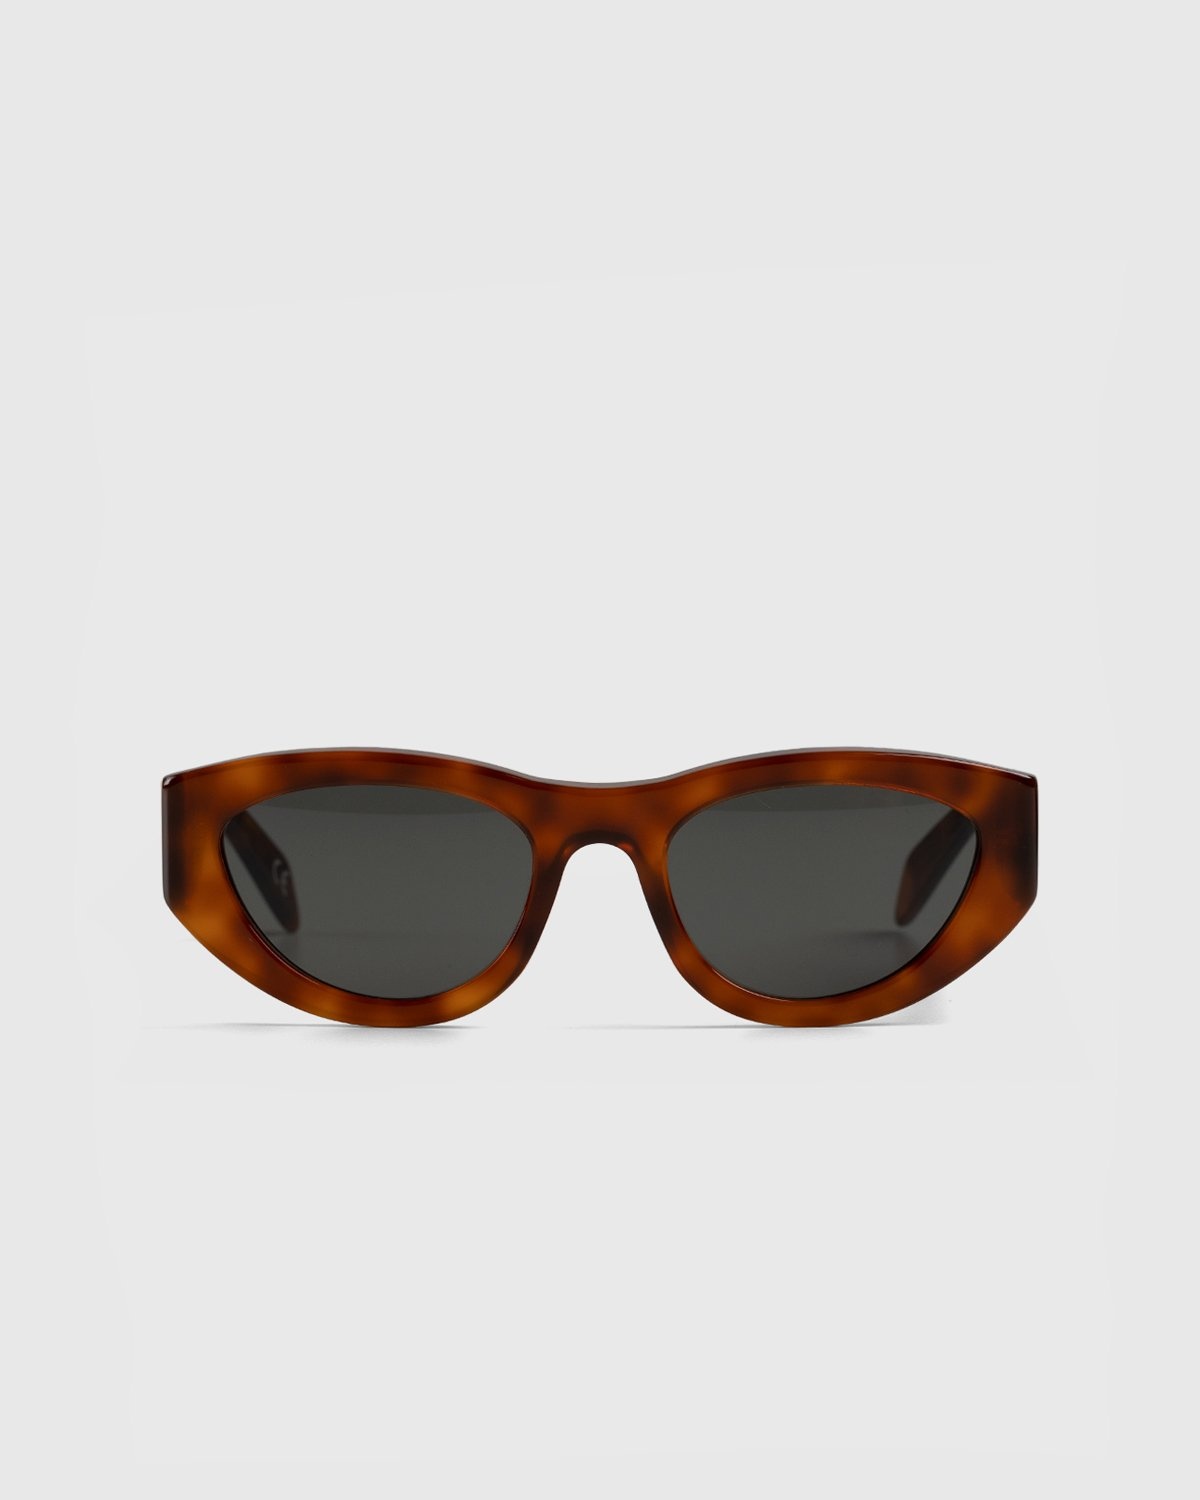 Marni – Rainbow Mountains Sunglasses Blonde Havana - Sunglasses - Brown - Image 1